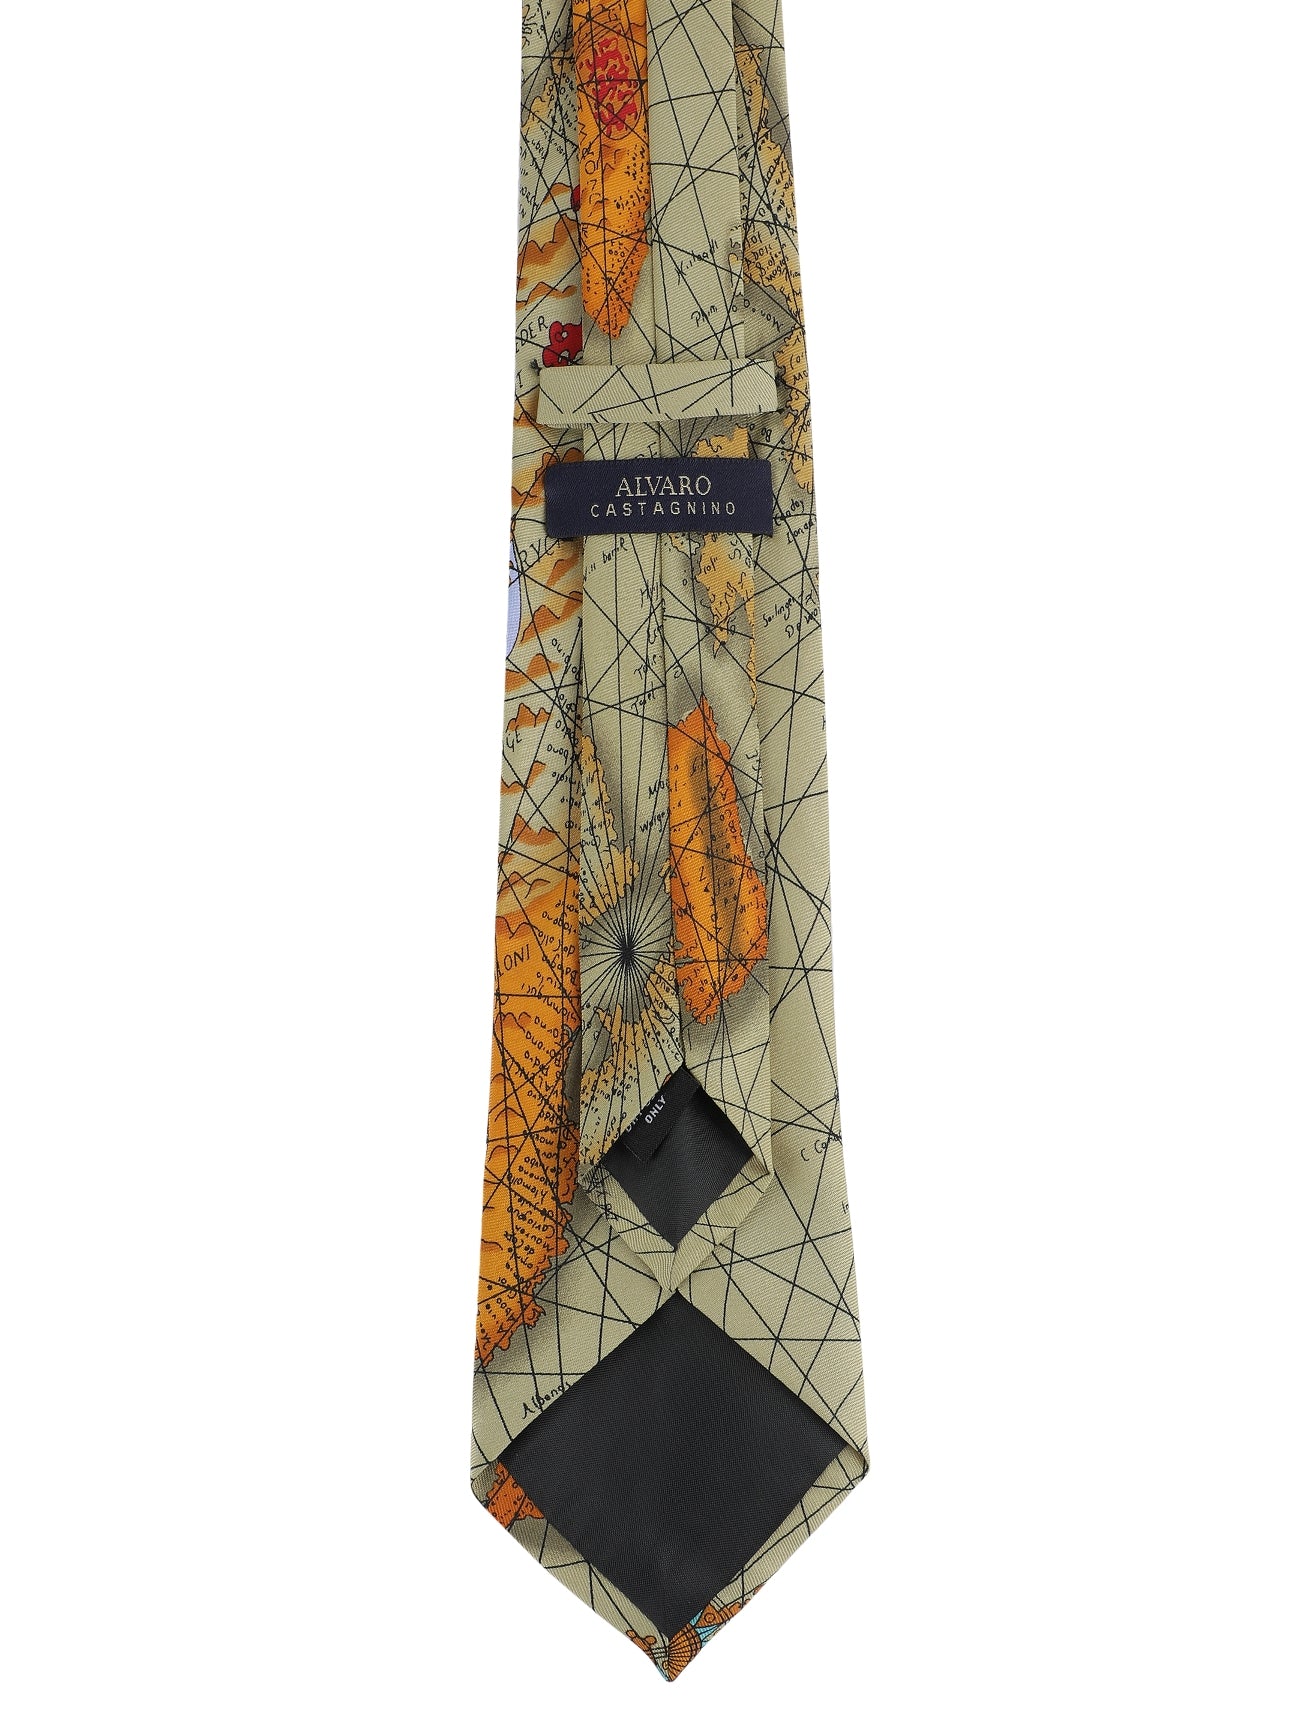 Alvaro Castagnino Microfiber Multi Colored Printed Necktie for Men